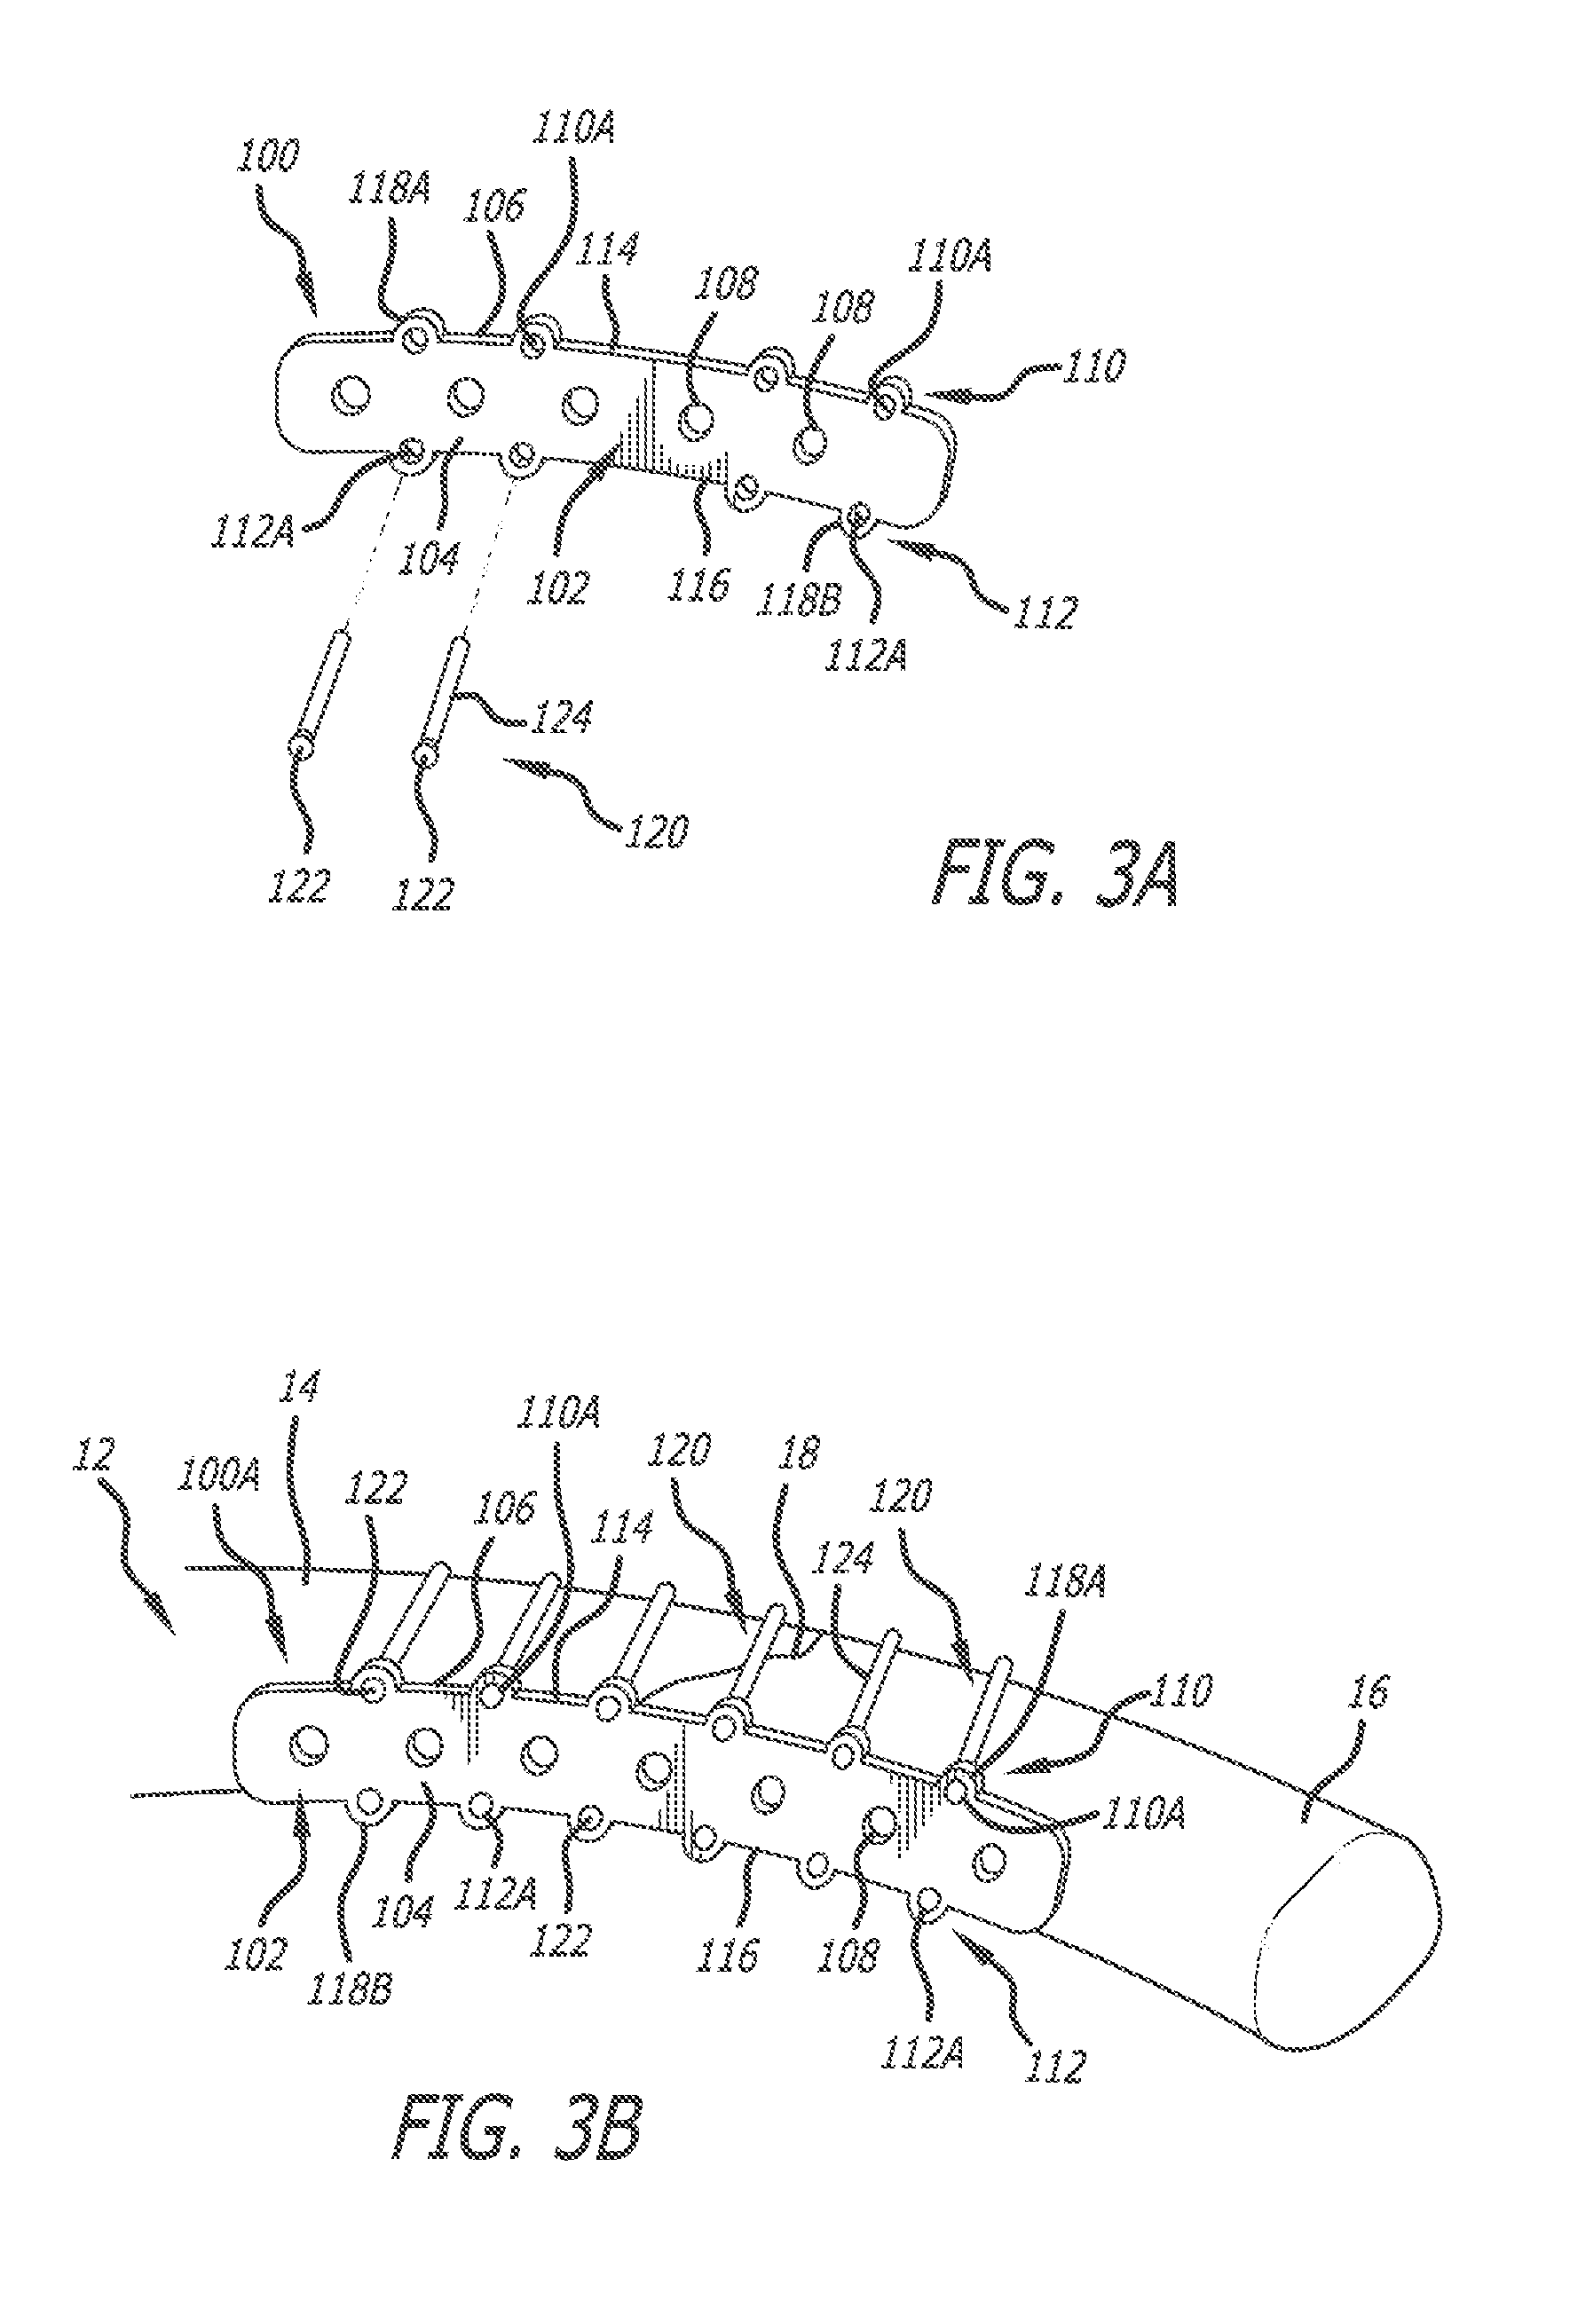 Modular and non-modular cortical buttress device